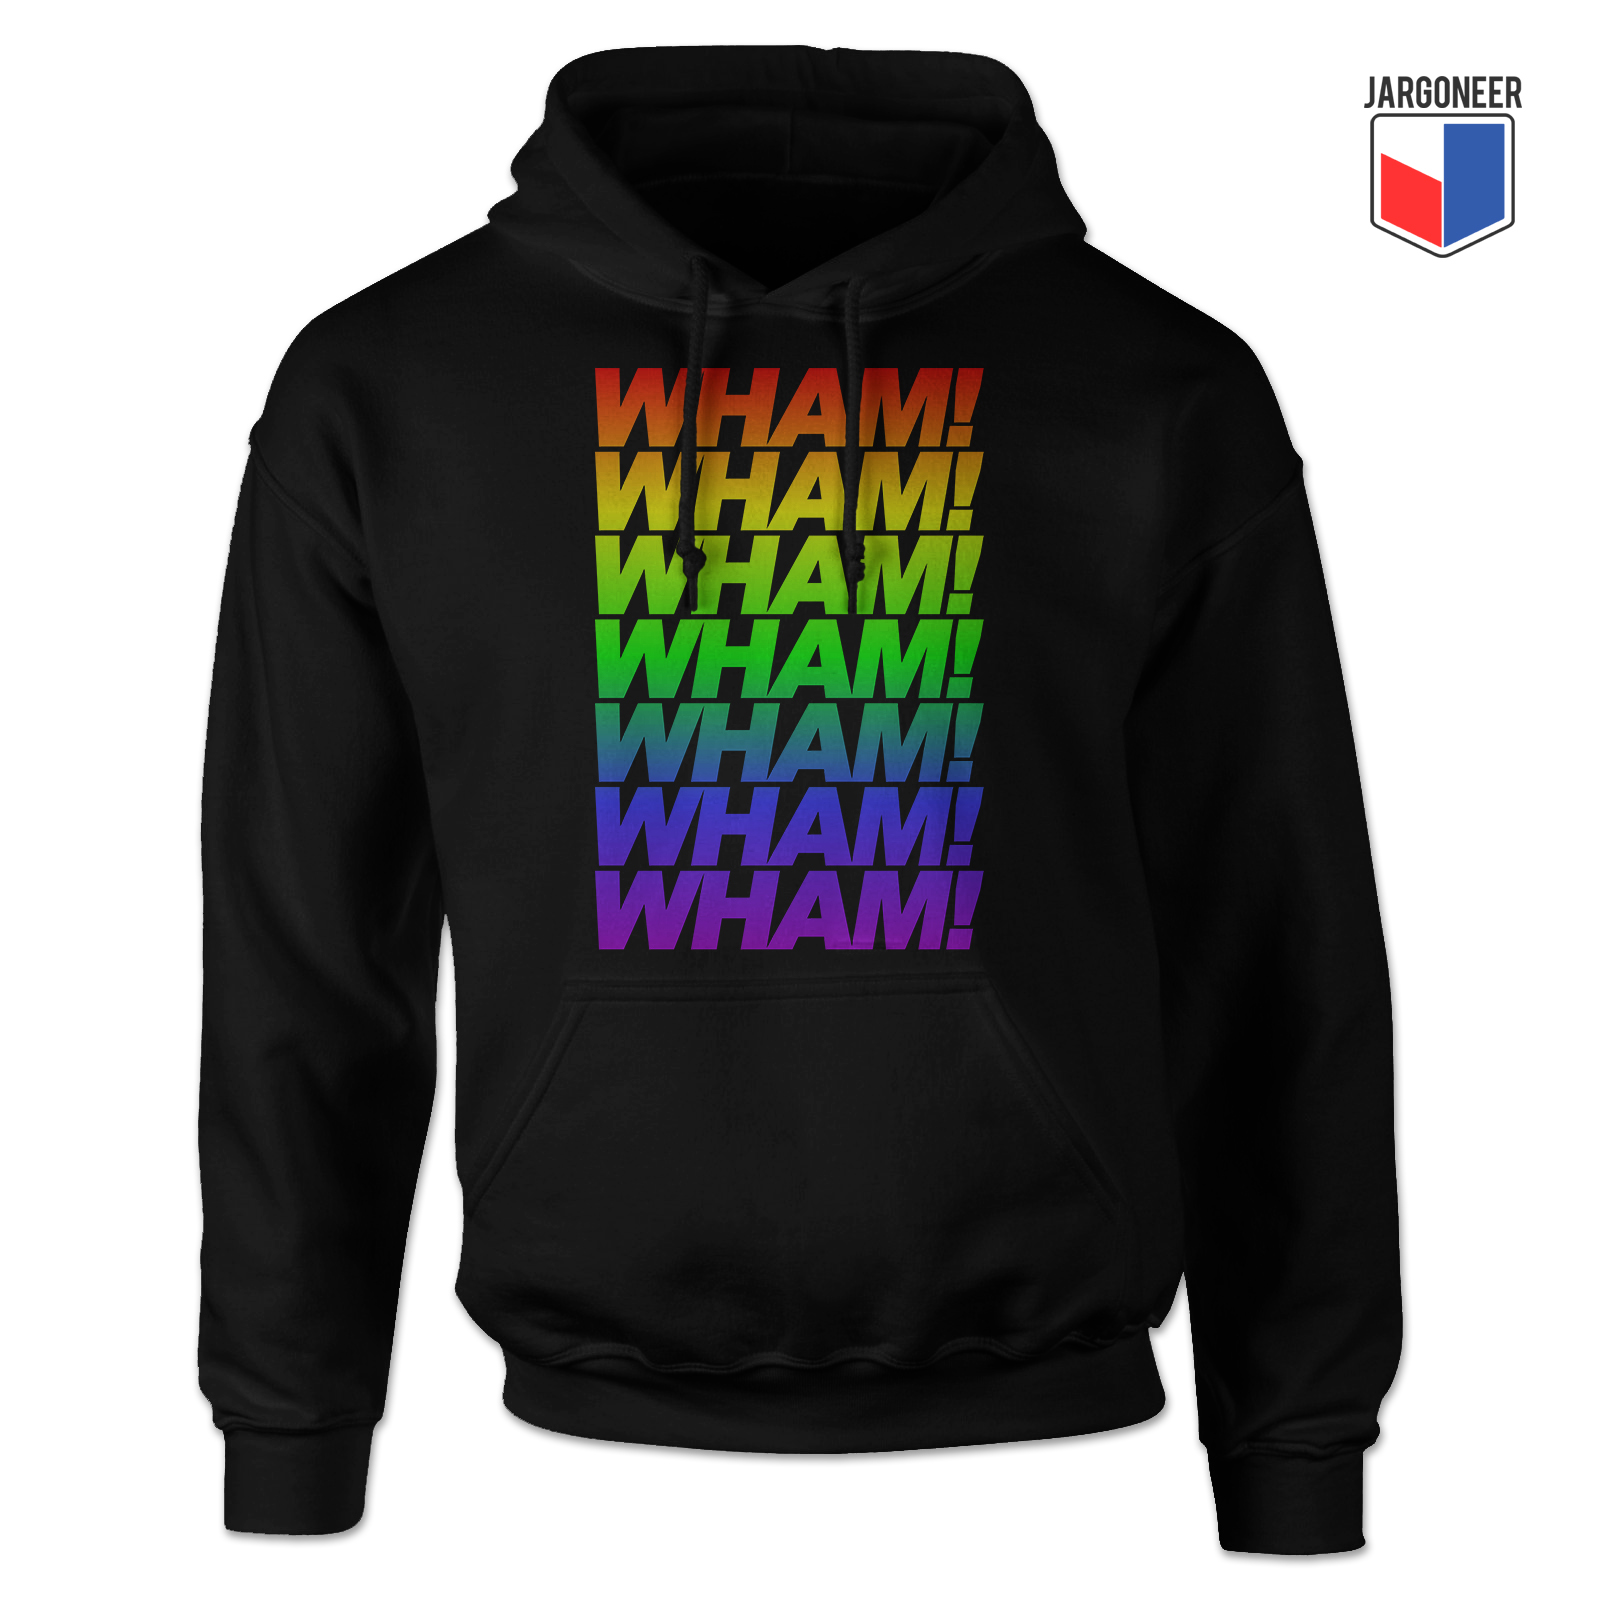 Wham Rainbow Black Hoody - Shop Unique Graphic Cool Shirt Designs